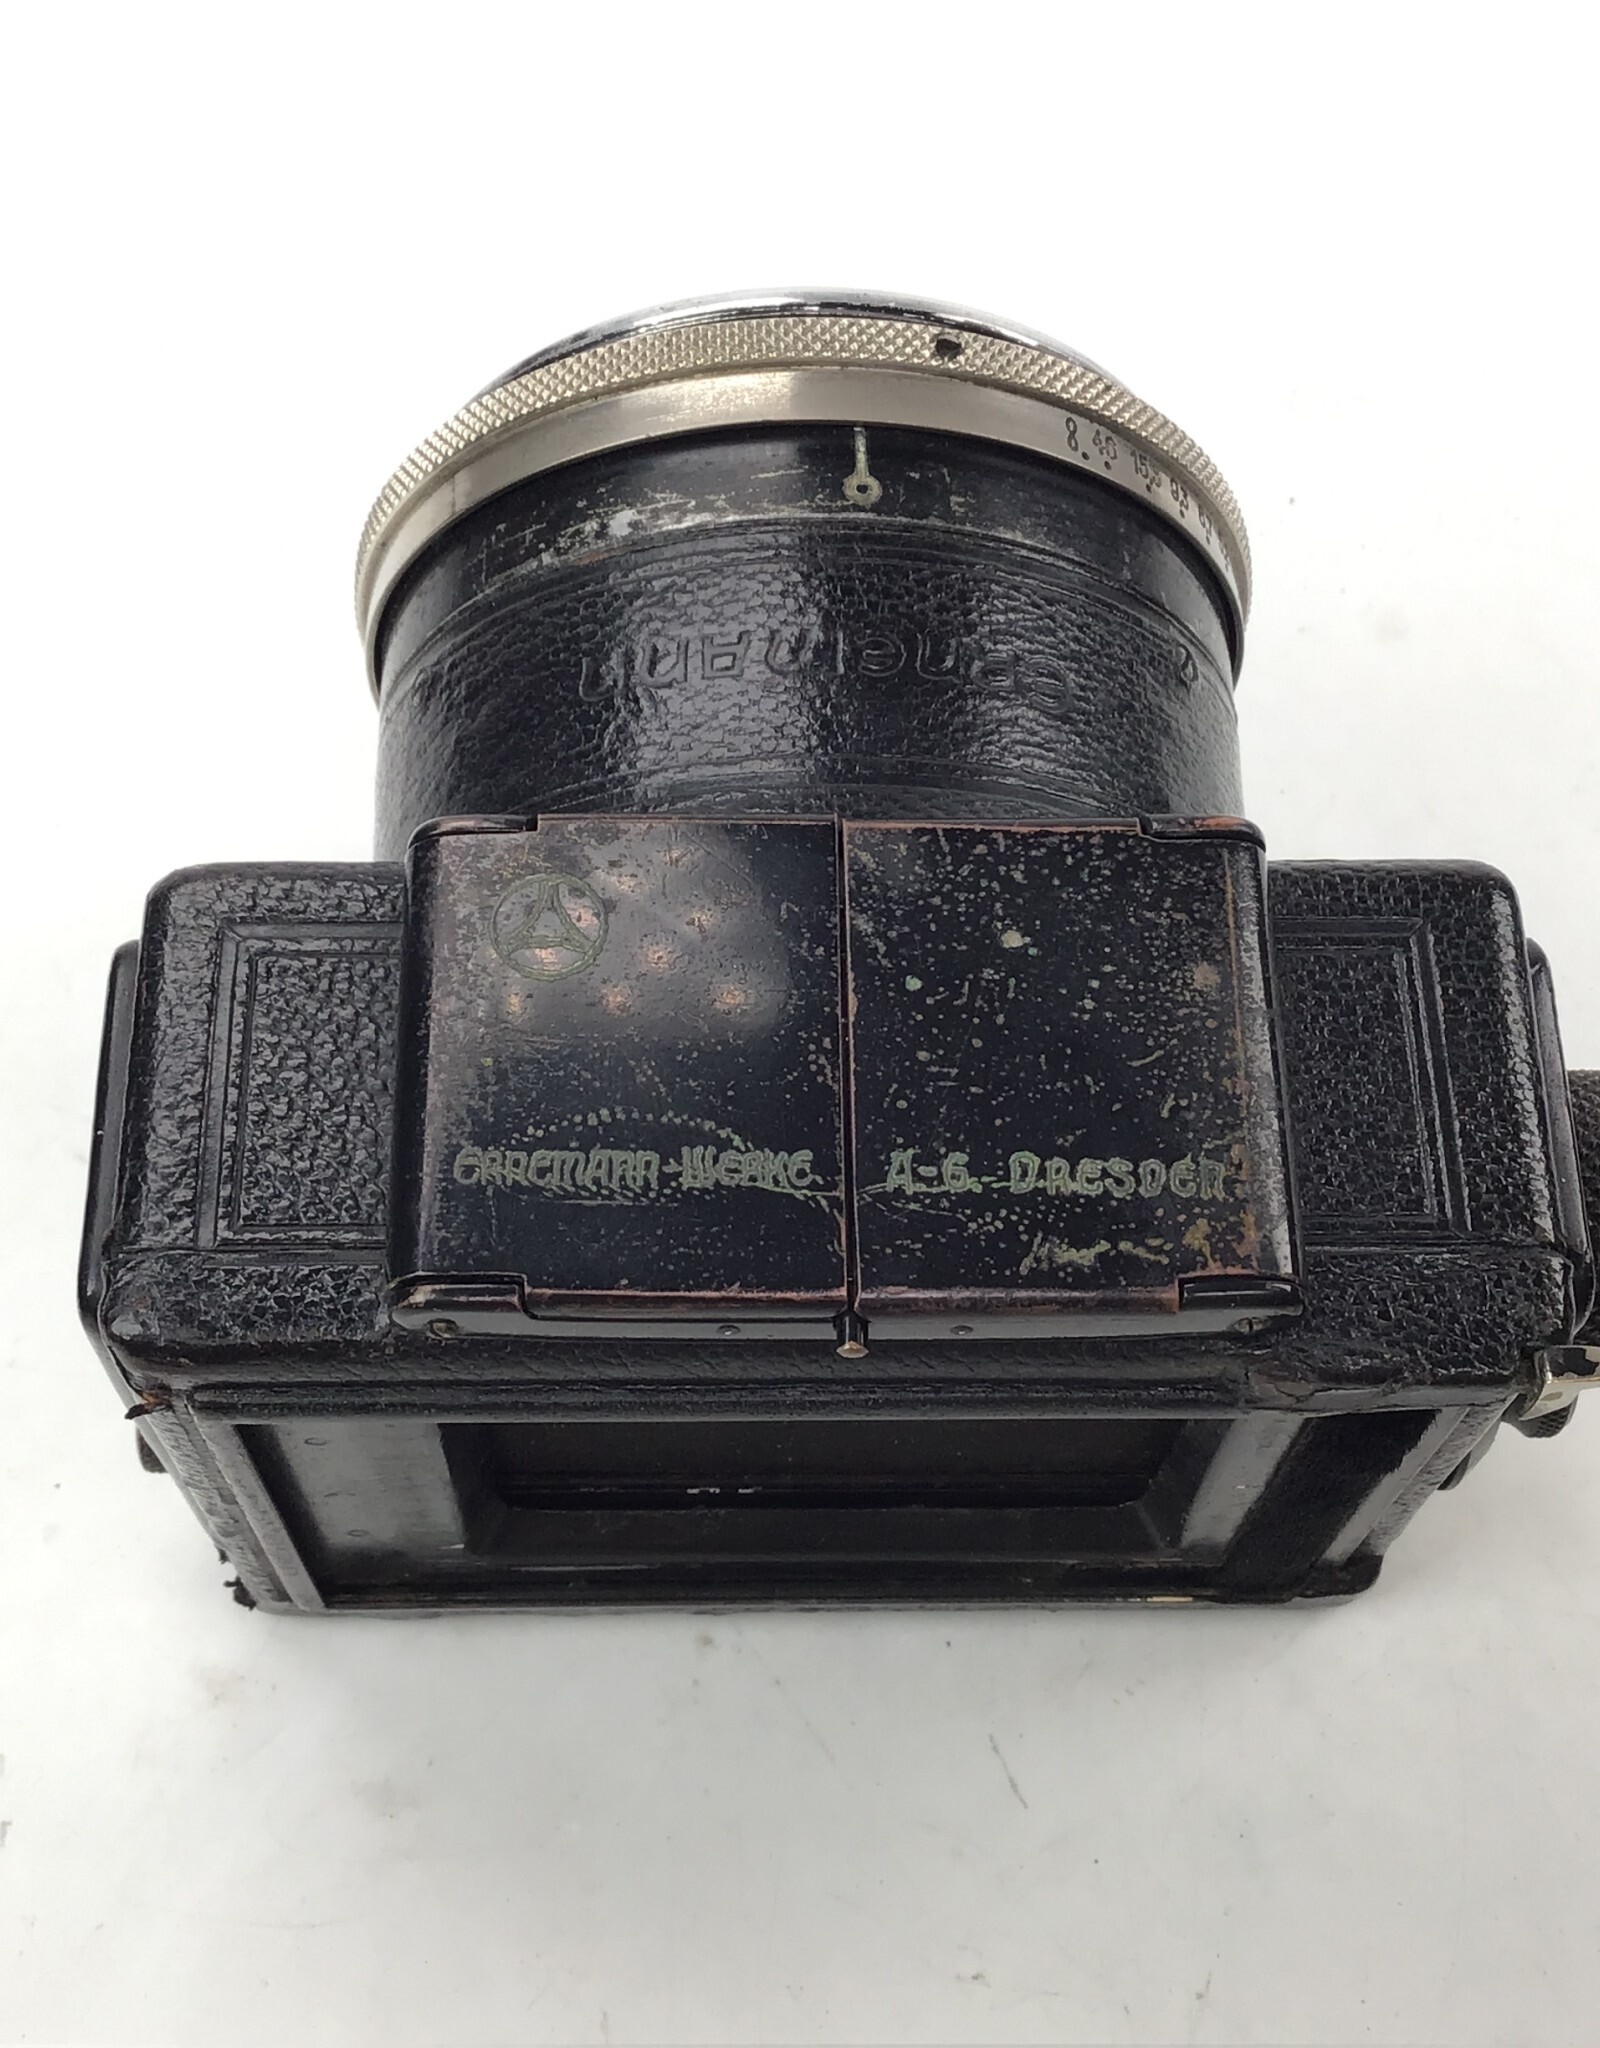 Ernemann Ermanox Camera w/ 10cm f2 Outfit Used Disp